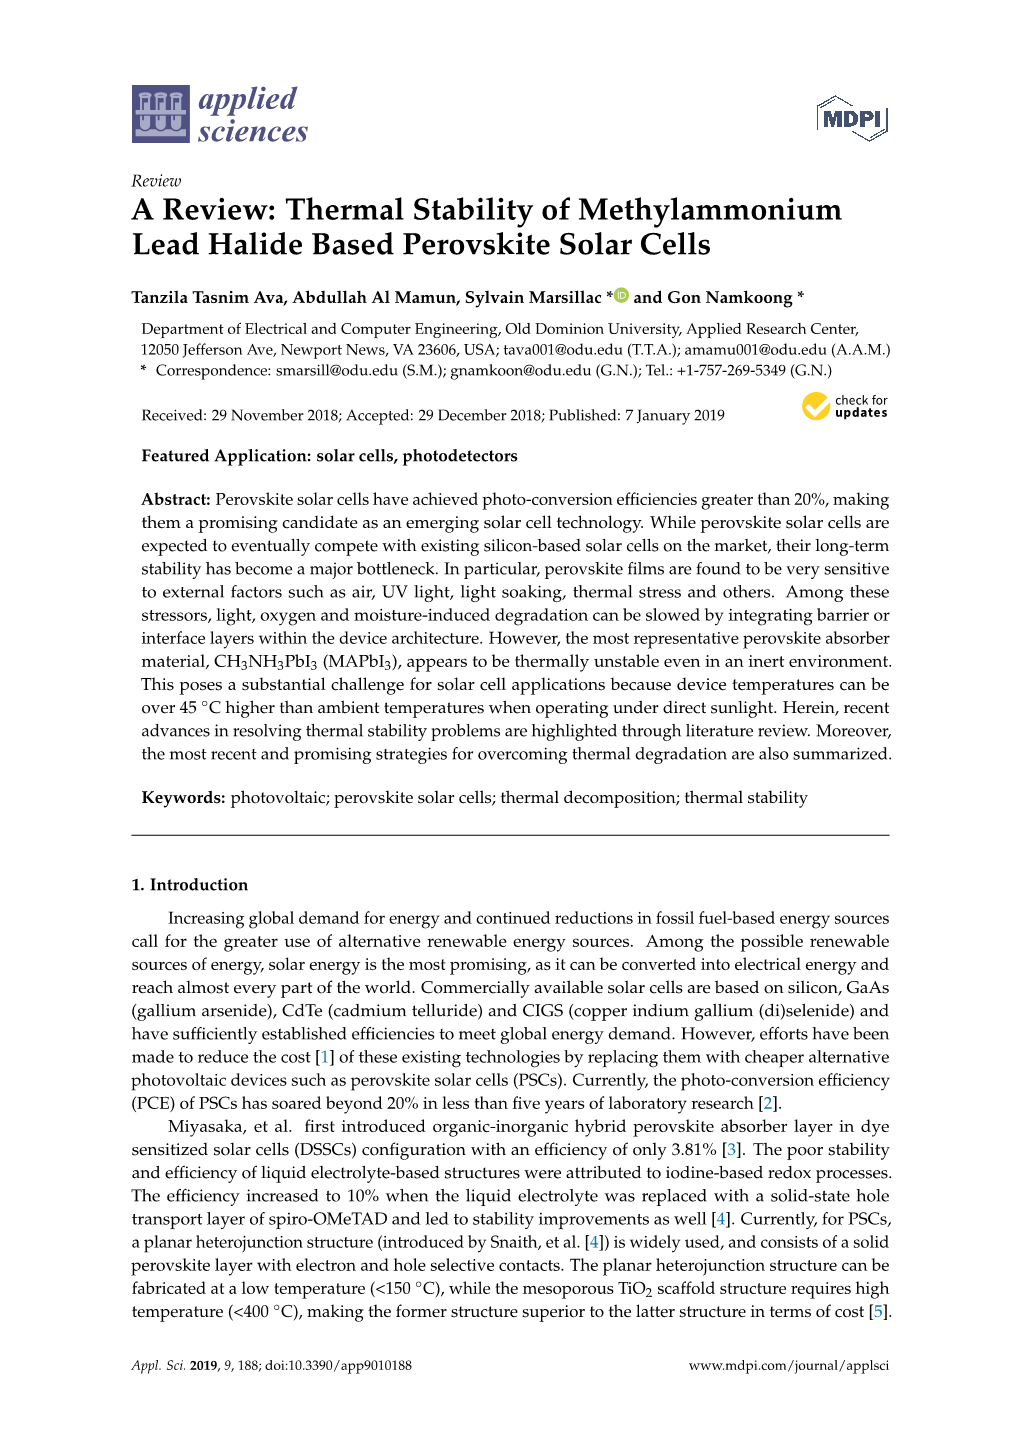 Thermal Stability of Methylammonium Lead Halide Based Perovskite Solar Cells